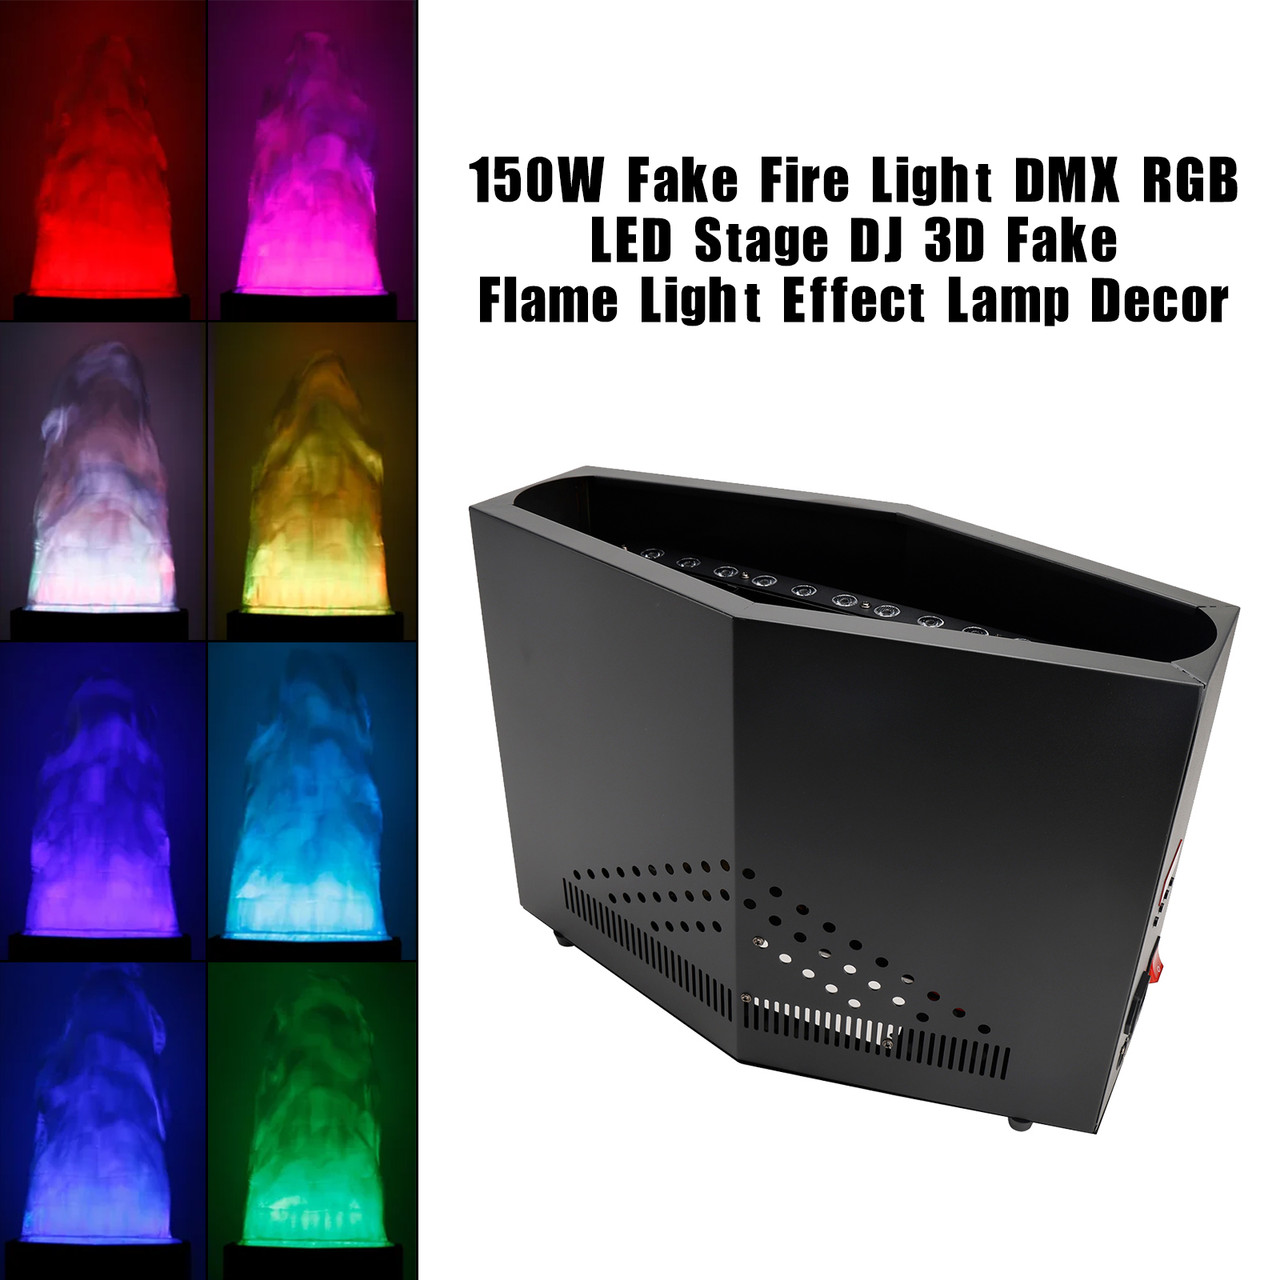 150W Fake Fire Light DMX RGB LED Stage DJ 3D Fake Flame Light Effect Lamp Decor